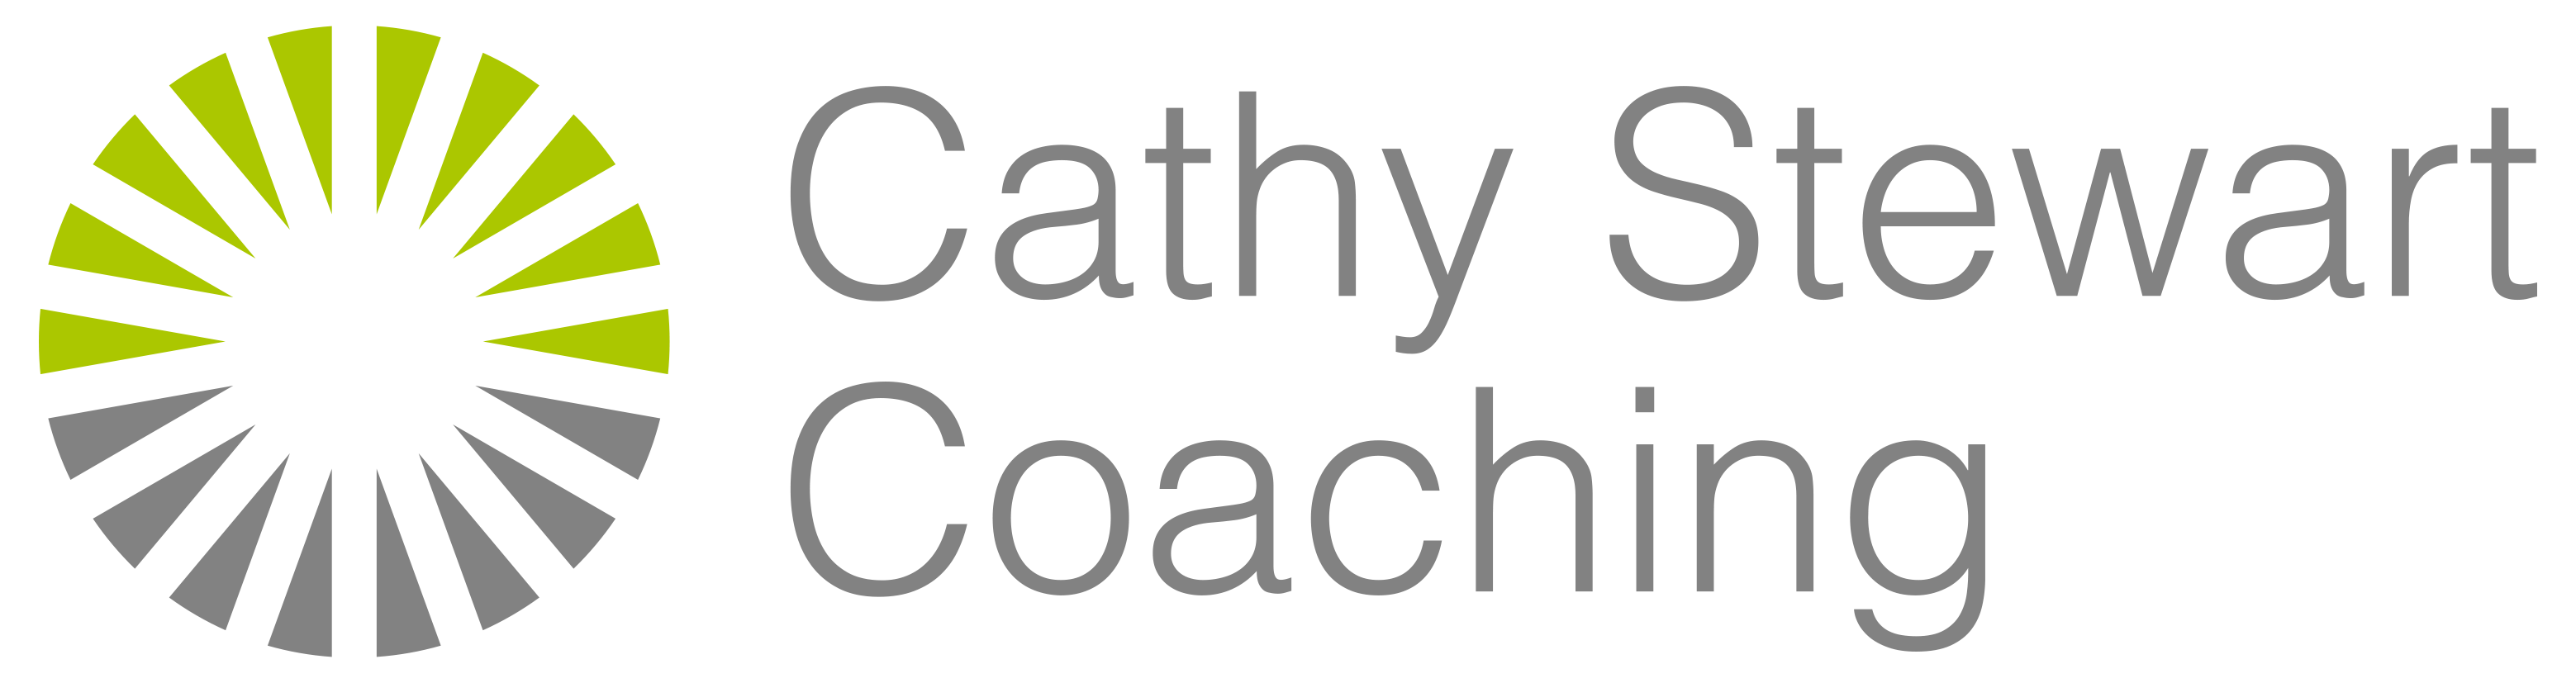 Cathy Stewart Coaching